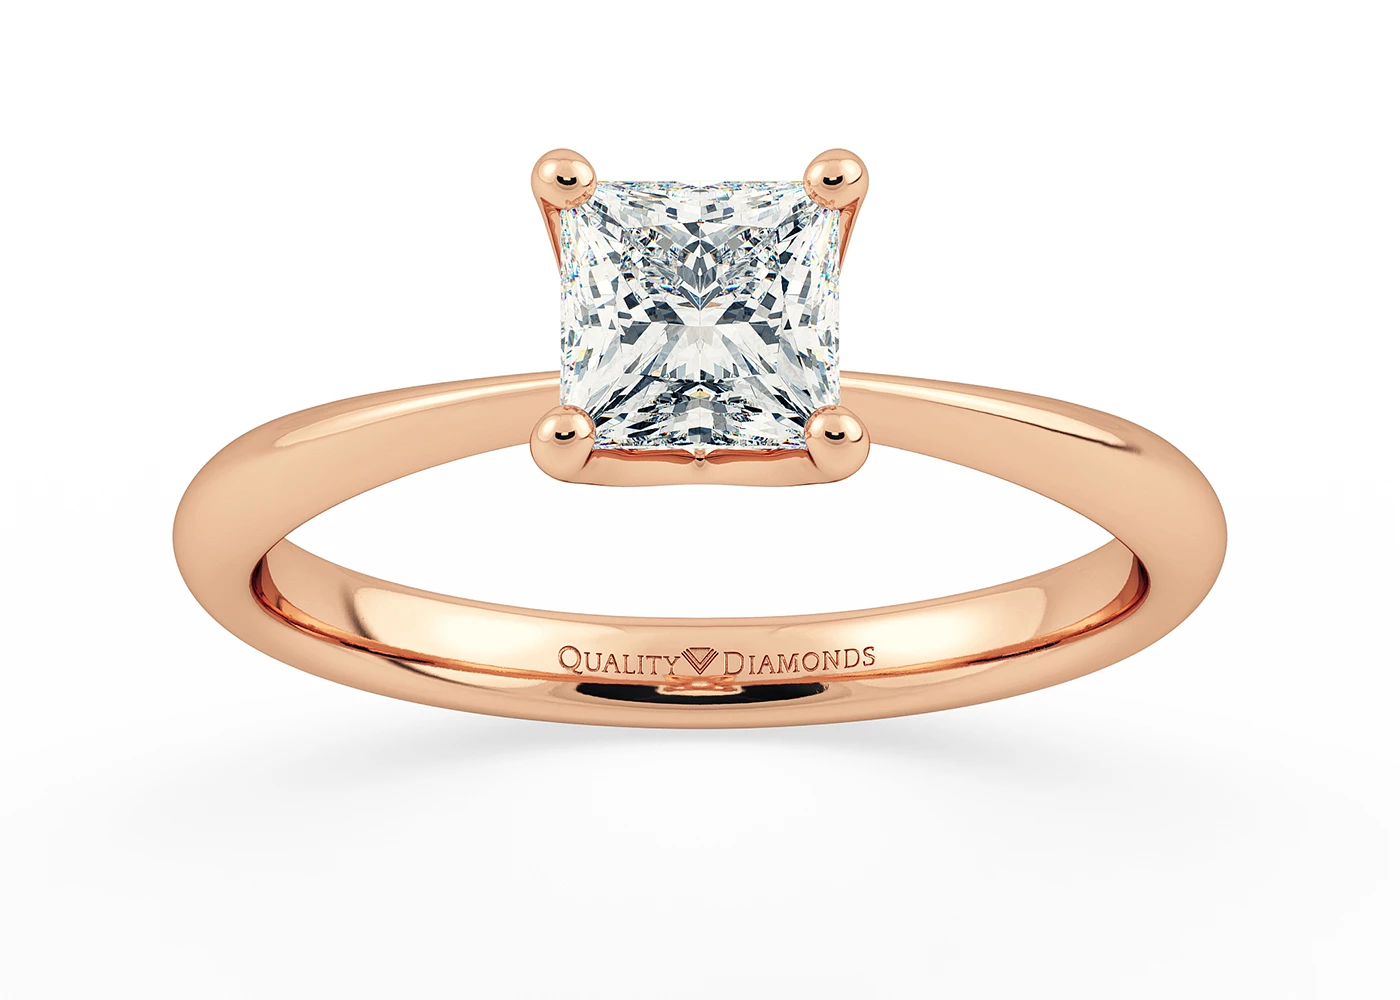 Princess Amorette Diamond Ring in 18K Rose Gold